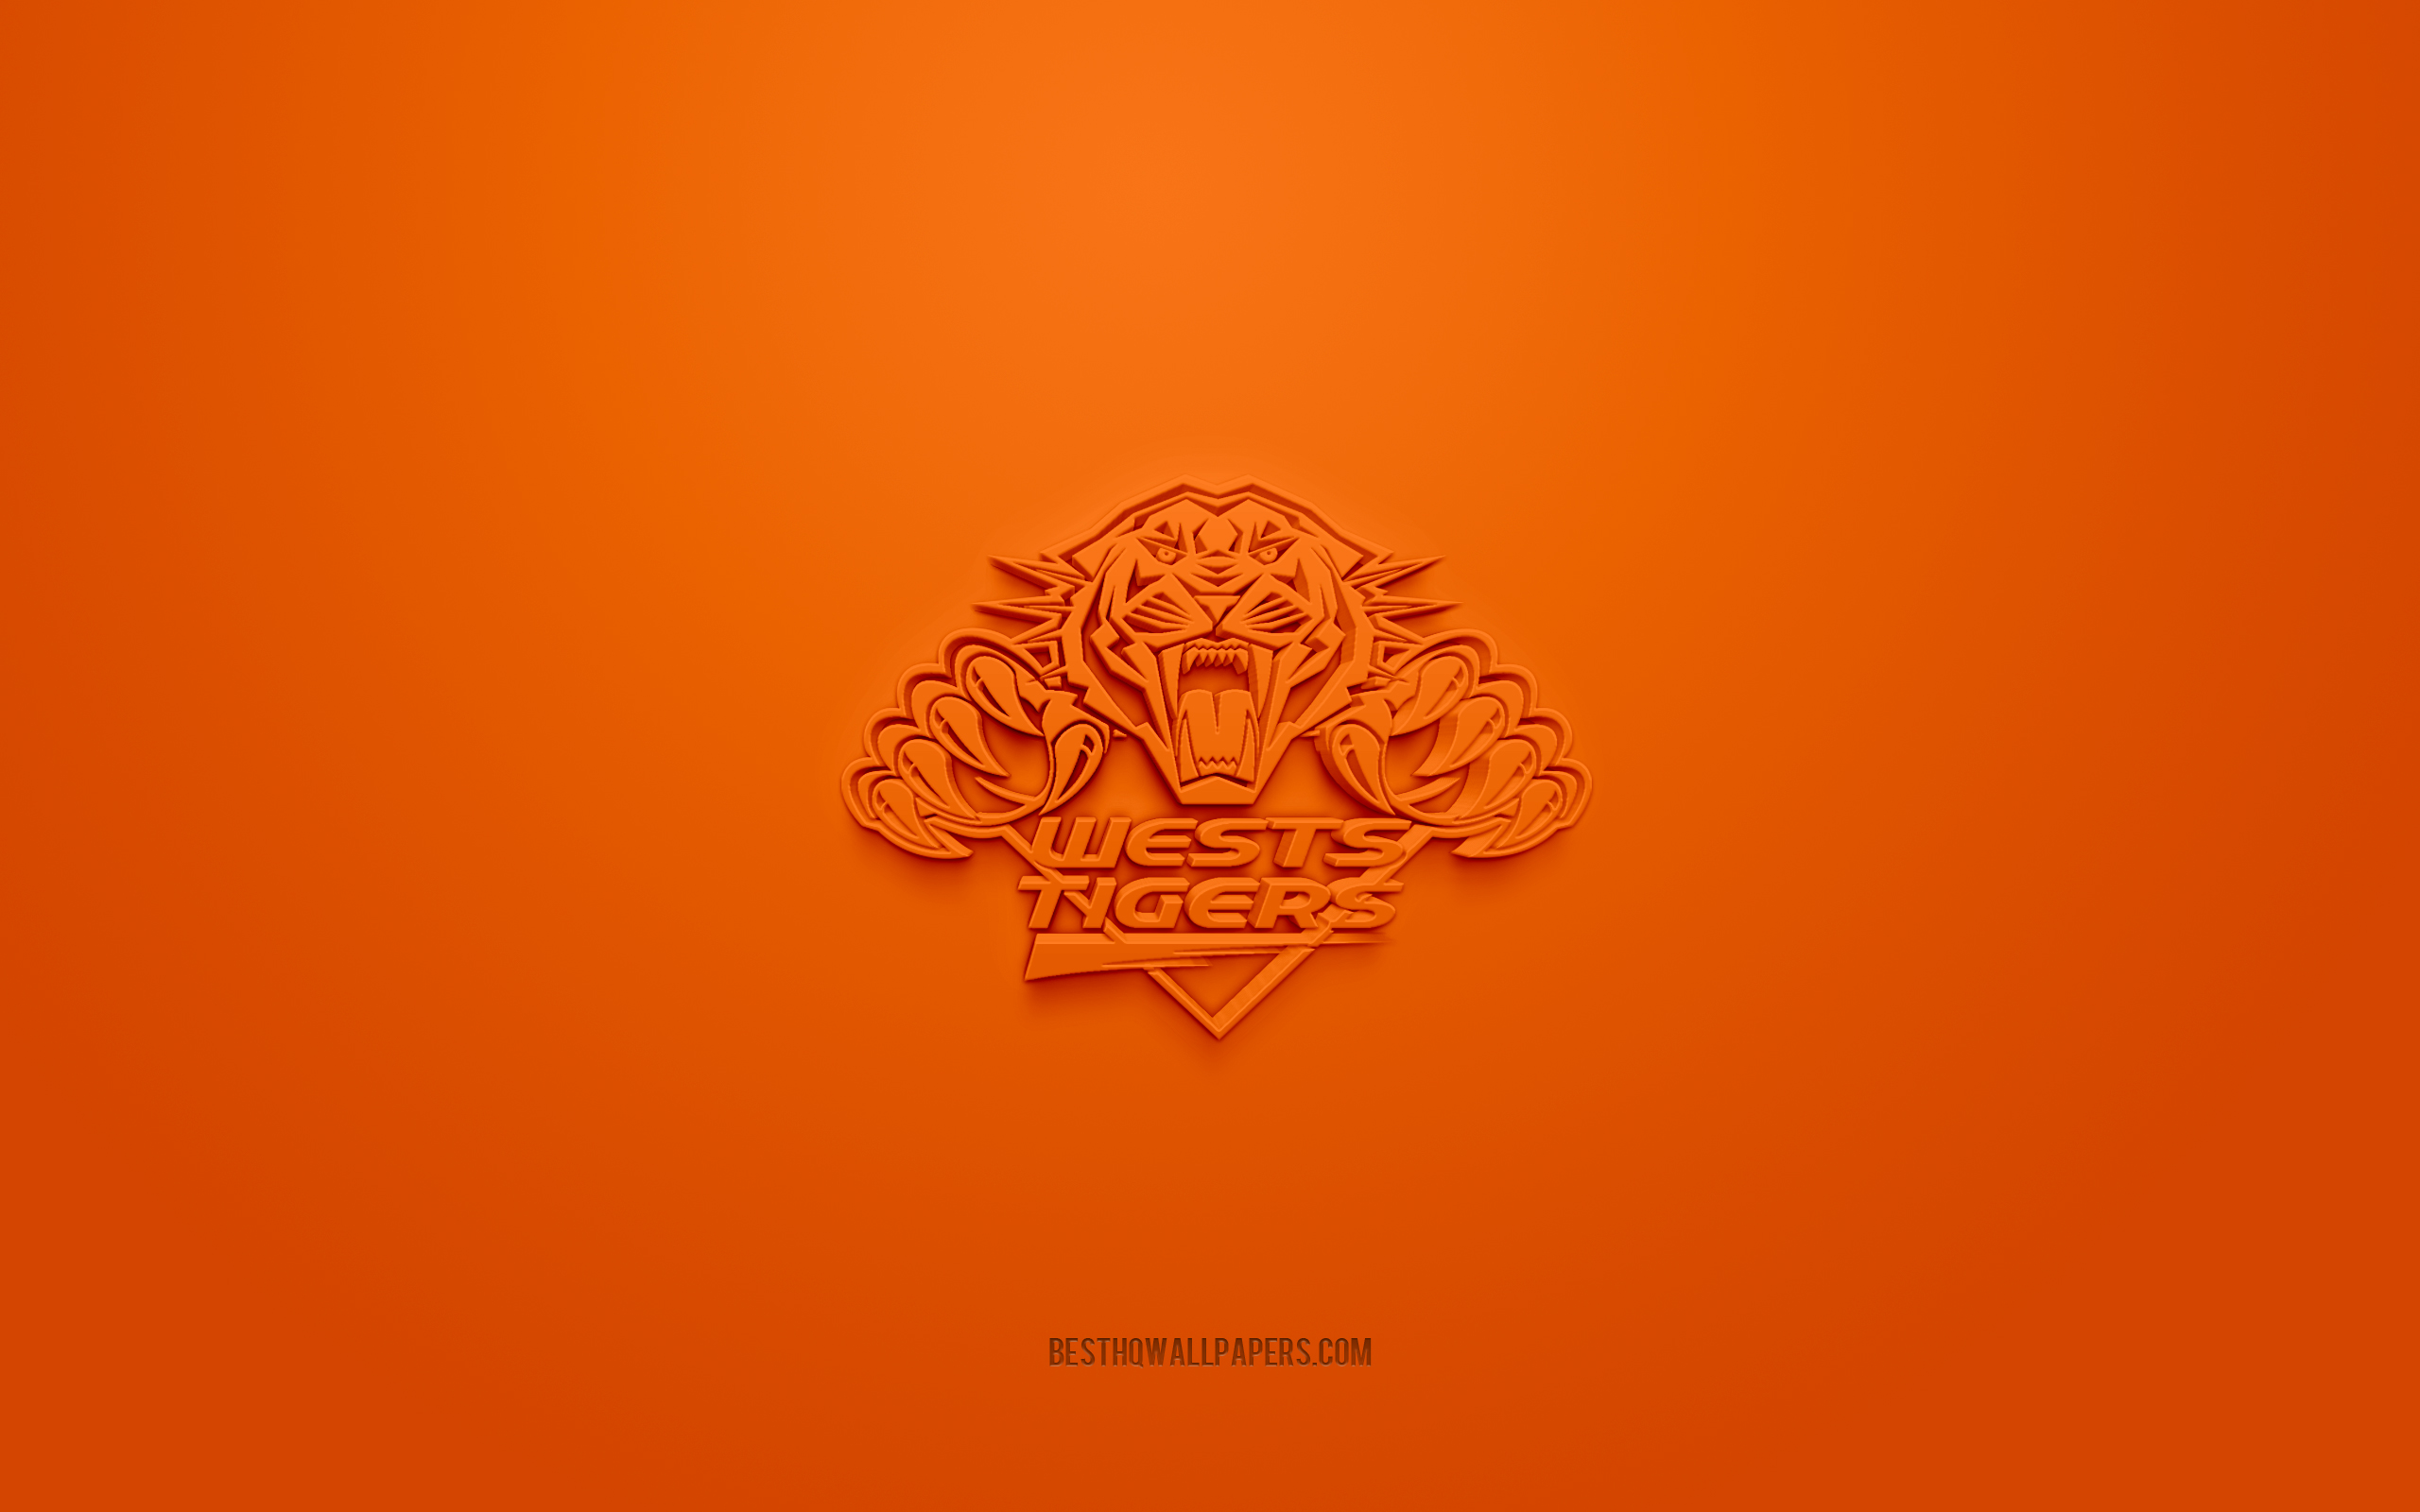 Wests Tigers, yaratıcı 3D logo, turuncu arka plan, Ulusal Rugby Ligi, 3d amblem, NRL, Avustralya ragbi ligi, Sidney, Avustralya, 3d sanat, rugby, Wests Tigers 3d logosu